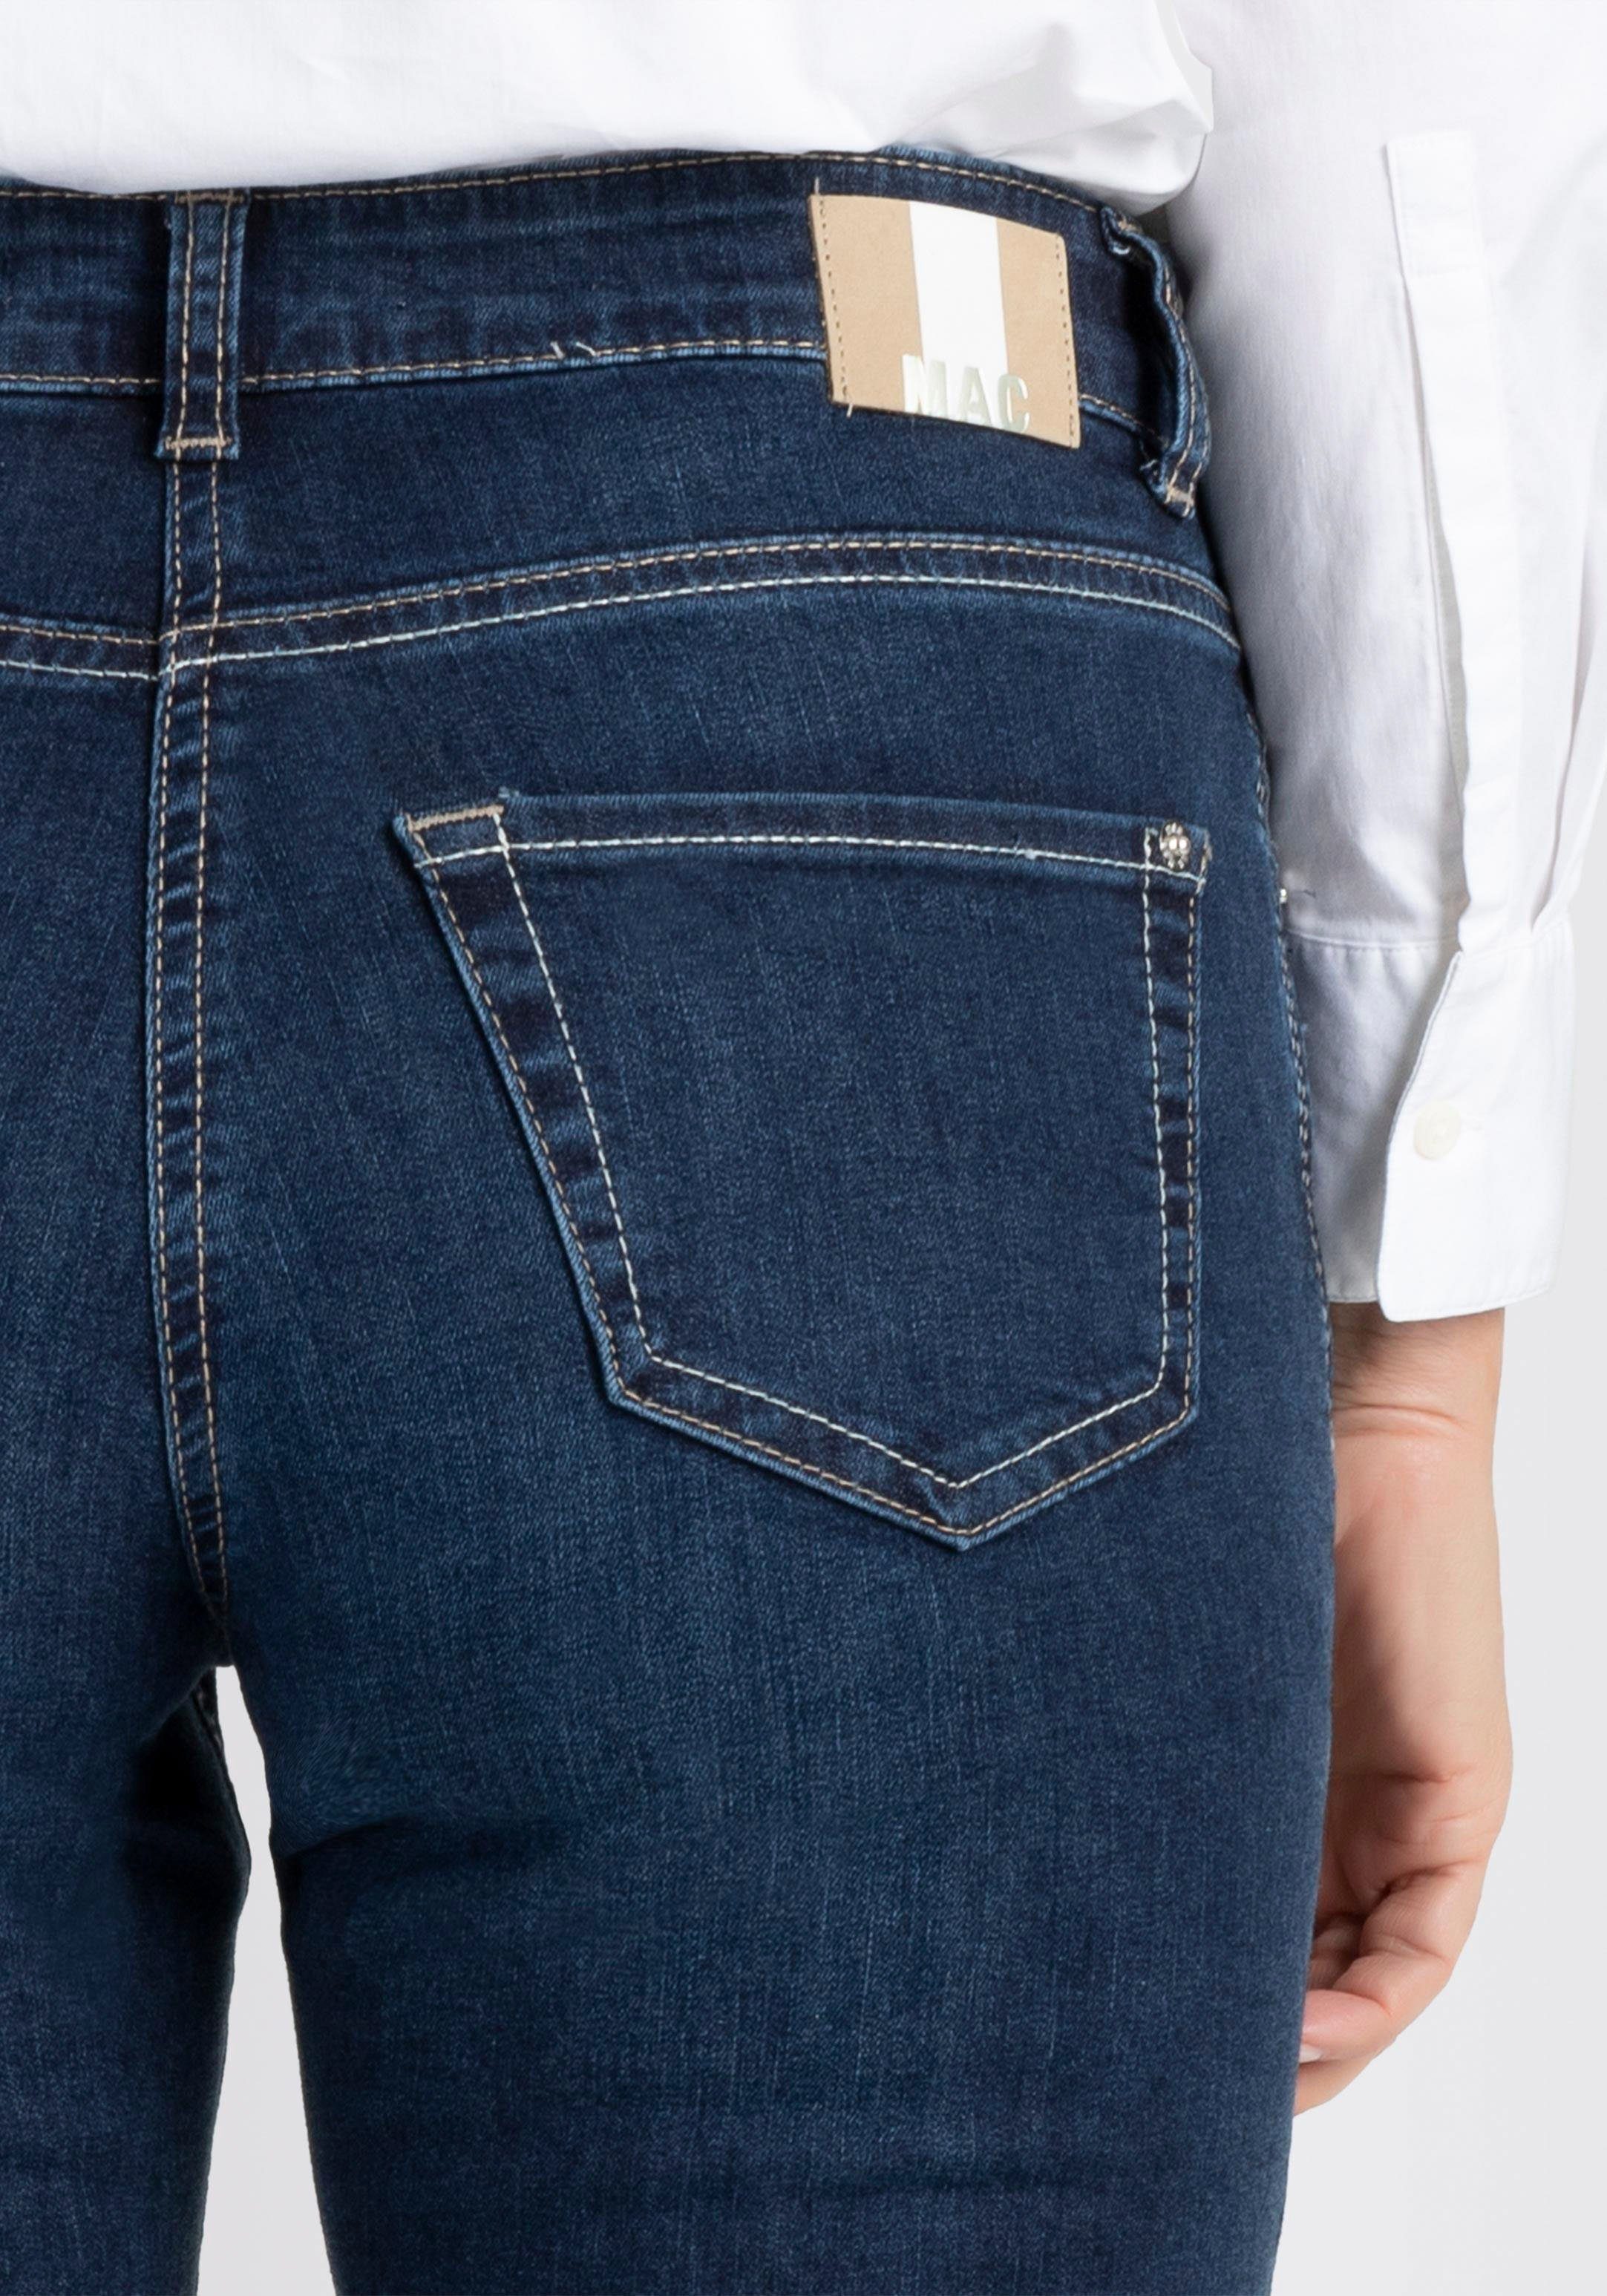 MAC Slim-fit-Jeans new basic wash